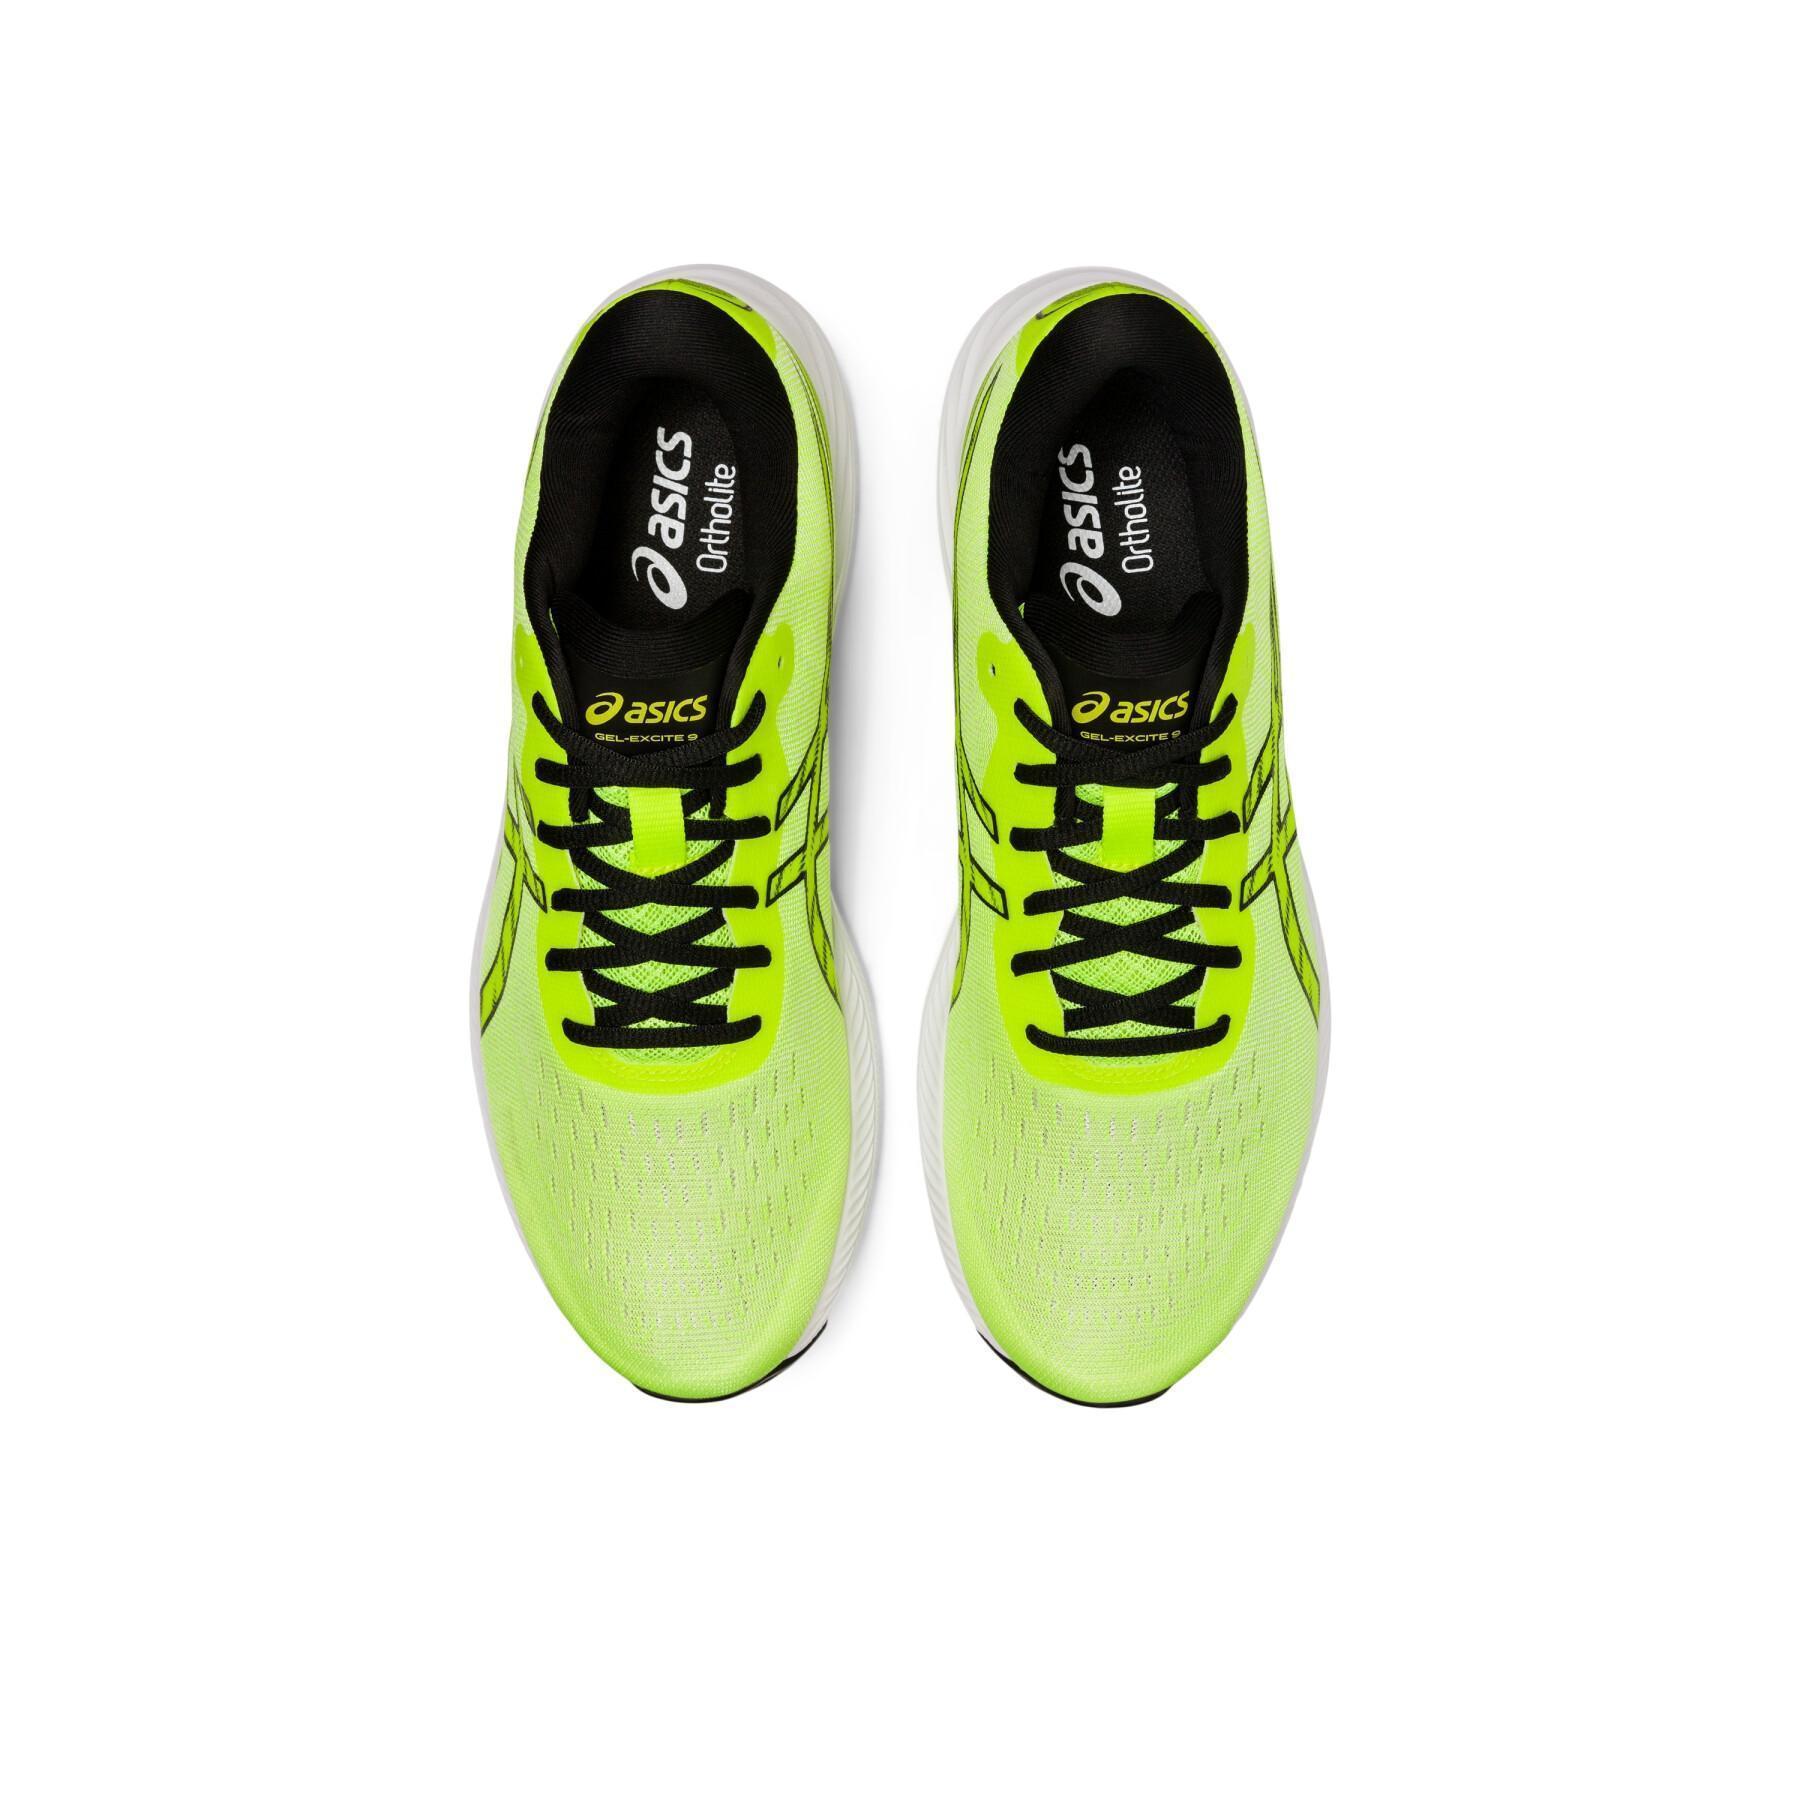 Chaussures de running Asics Gel-excite 9